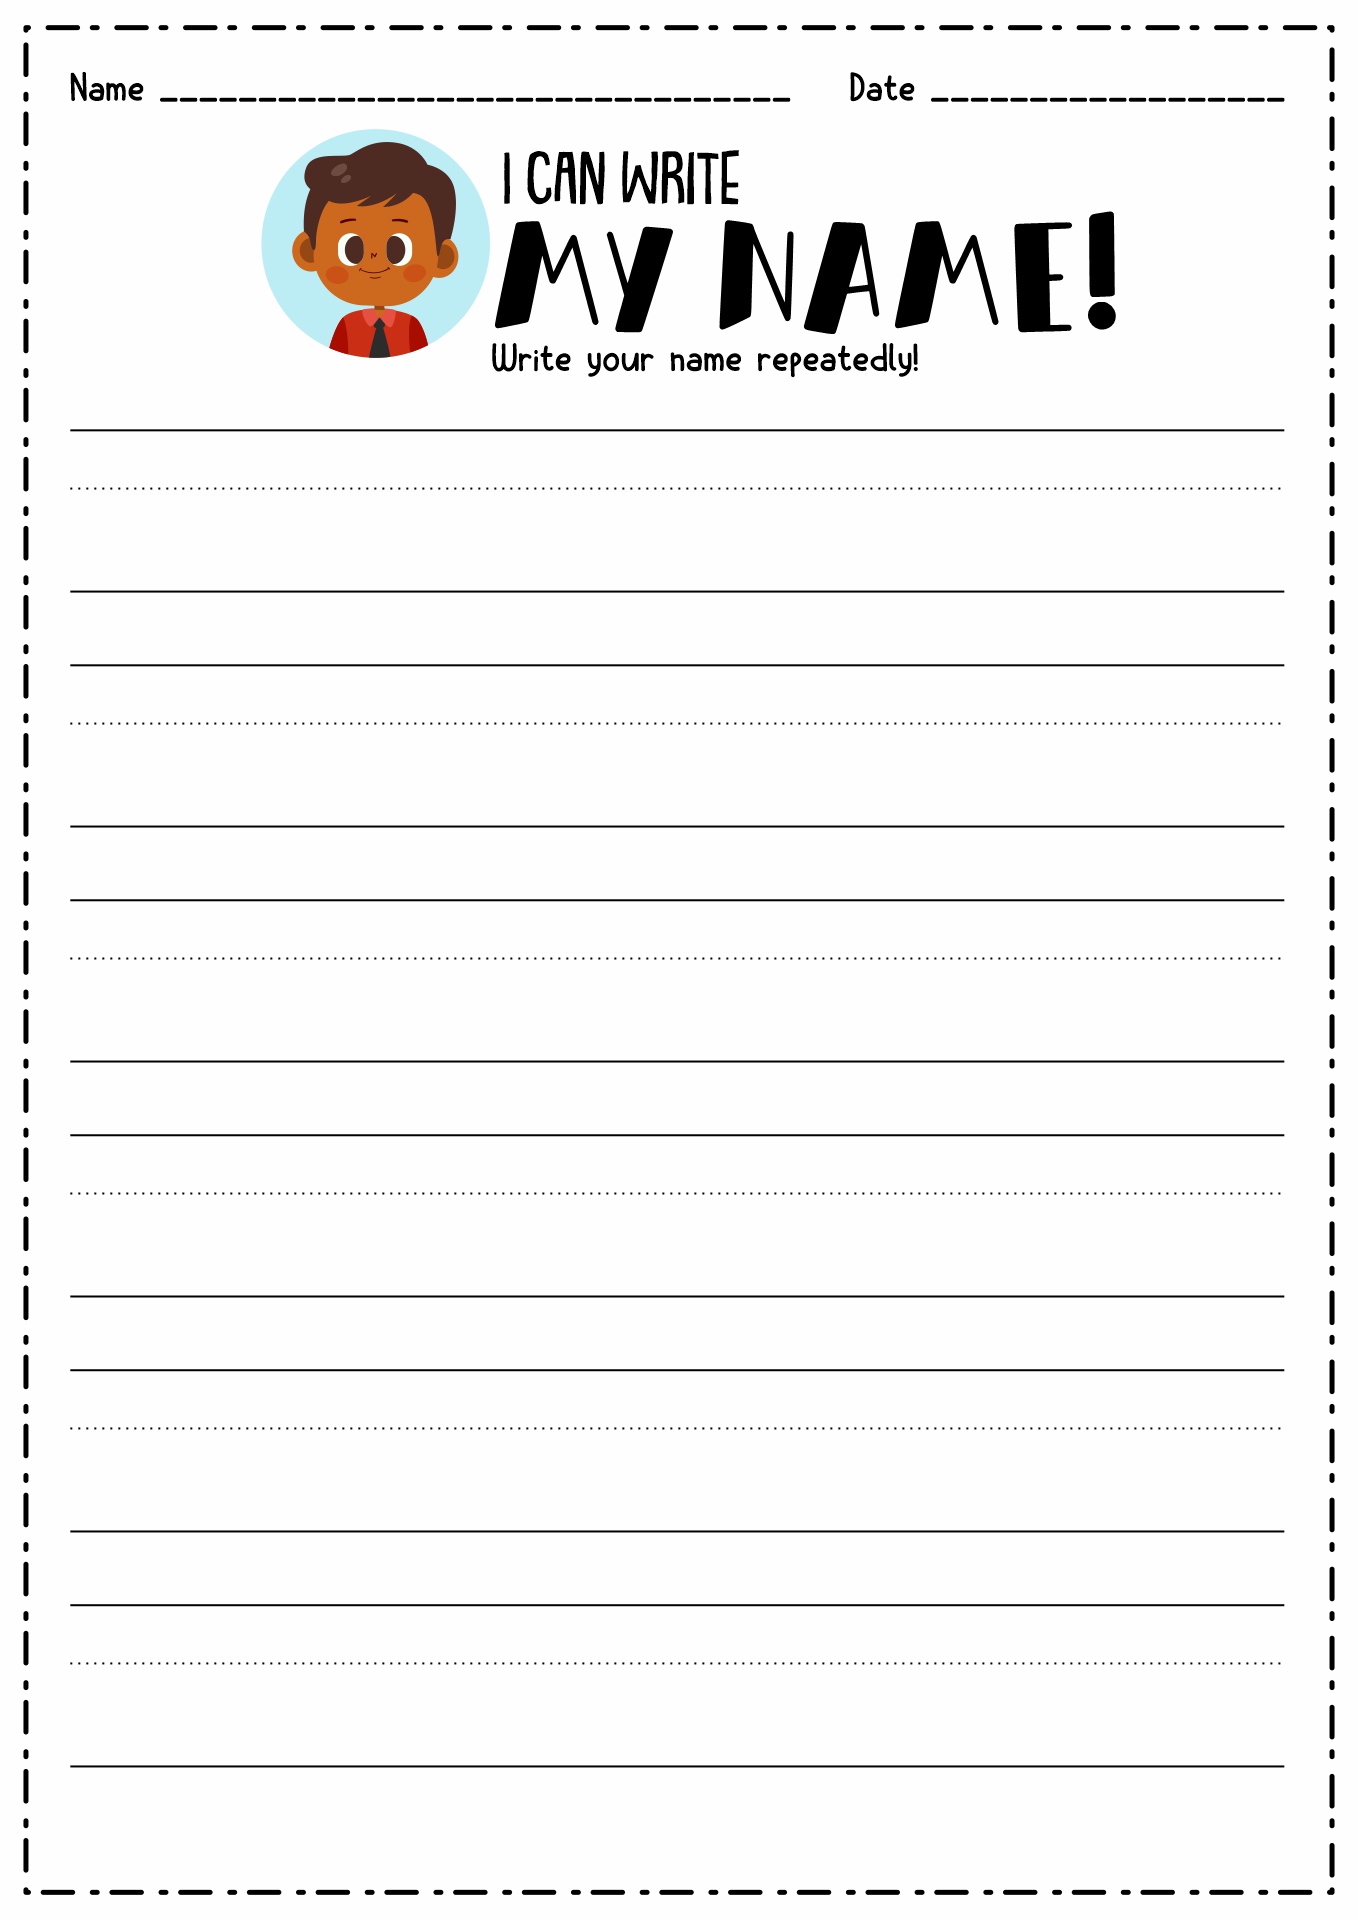 Preschool Name Tracing Worksheets Image